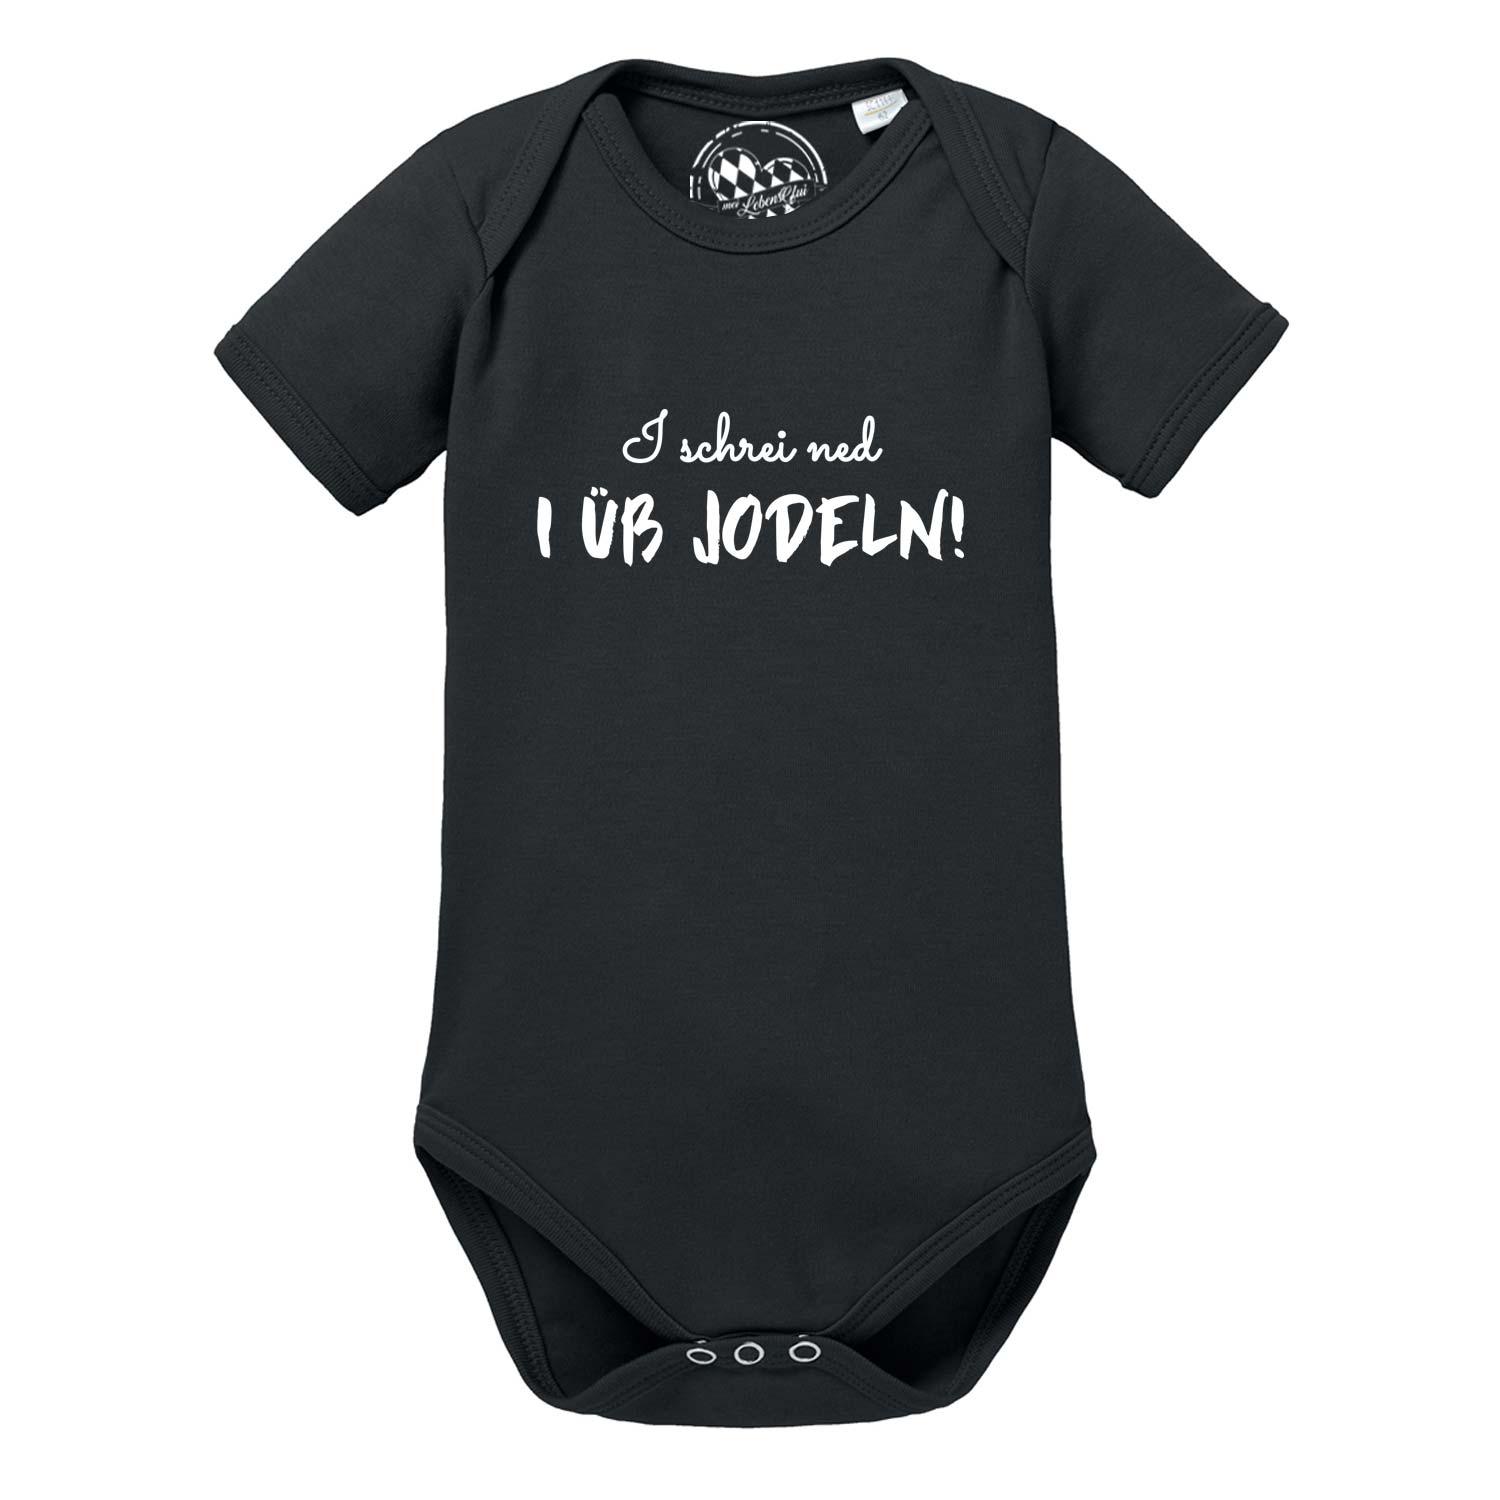 Baby Body "I üb jodeln" - bavariashop - mei LebensGfui